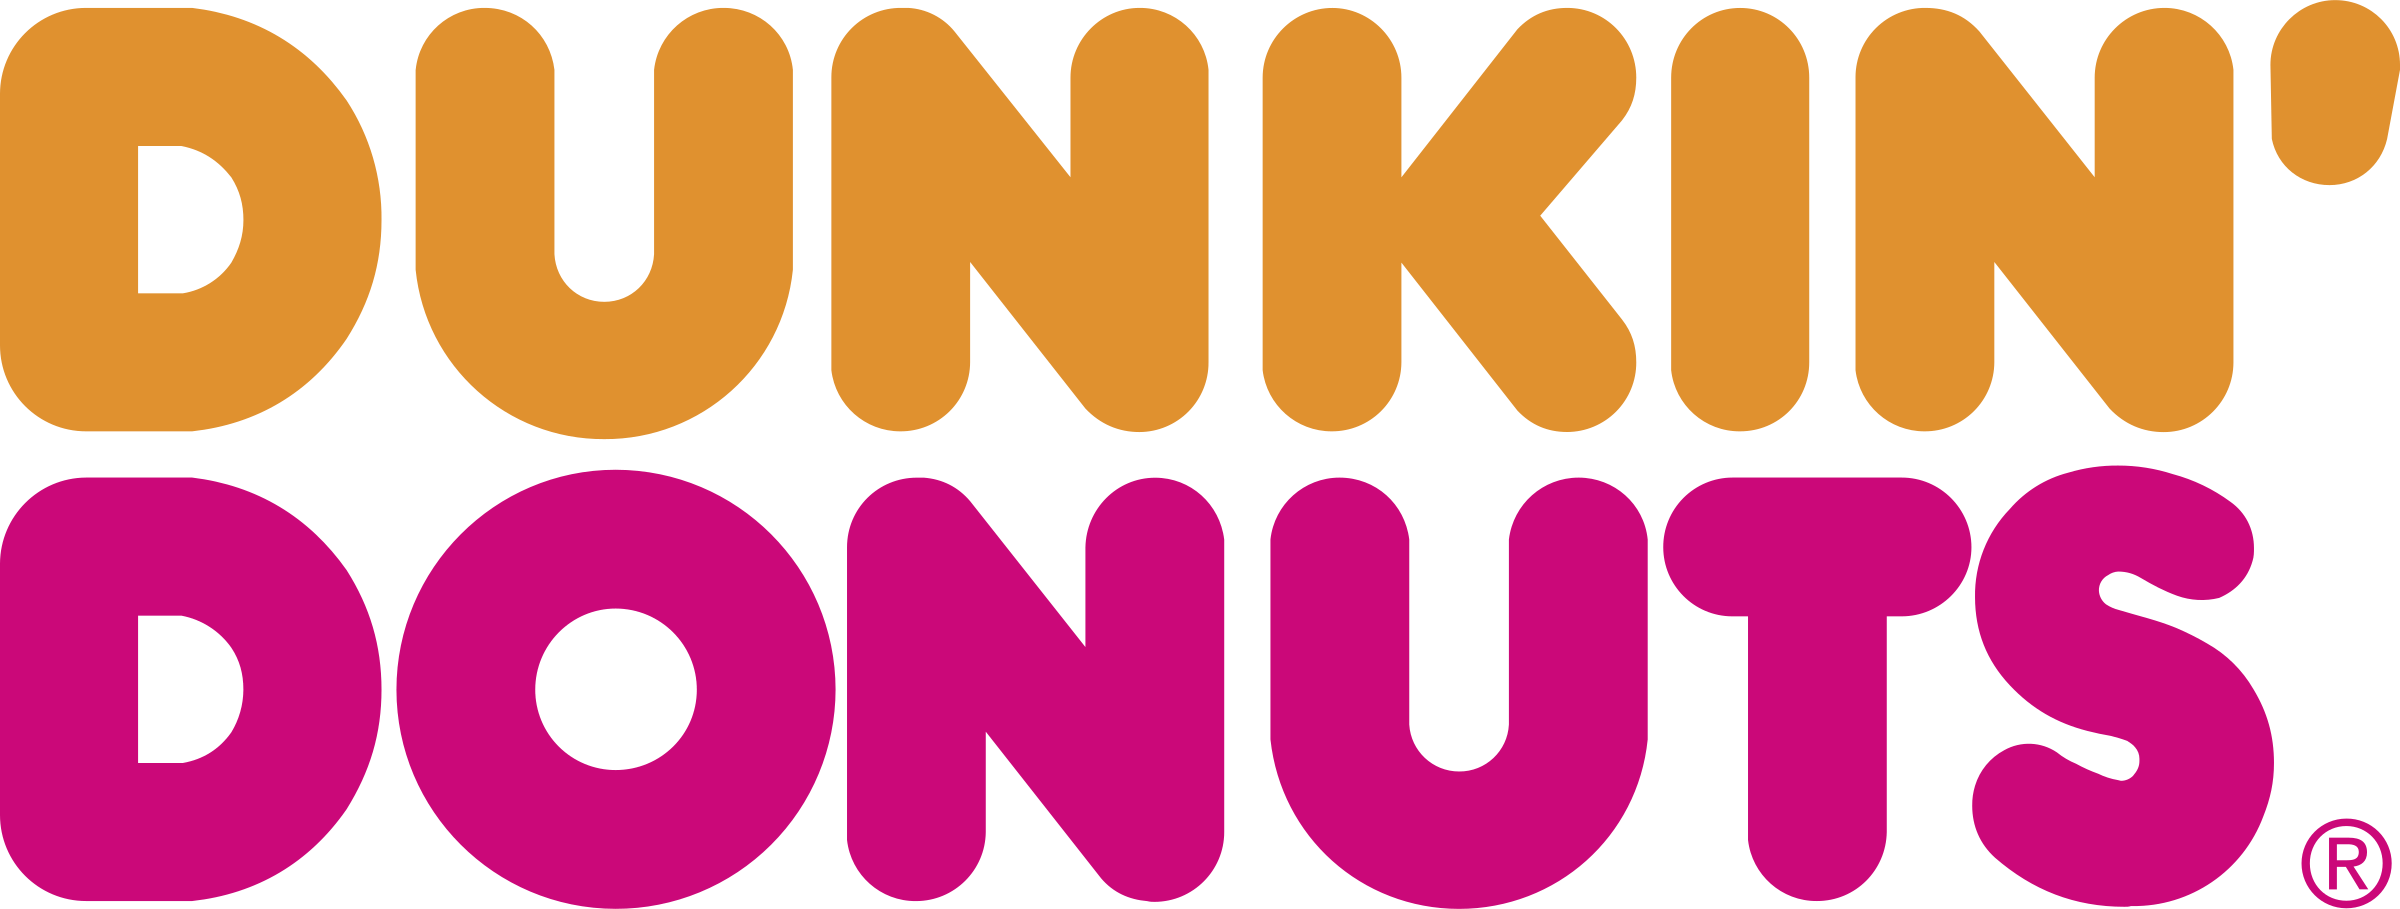 Dunkin Logo - Dunkin Donuts 1 Logo Png Transparent.png